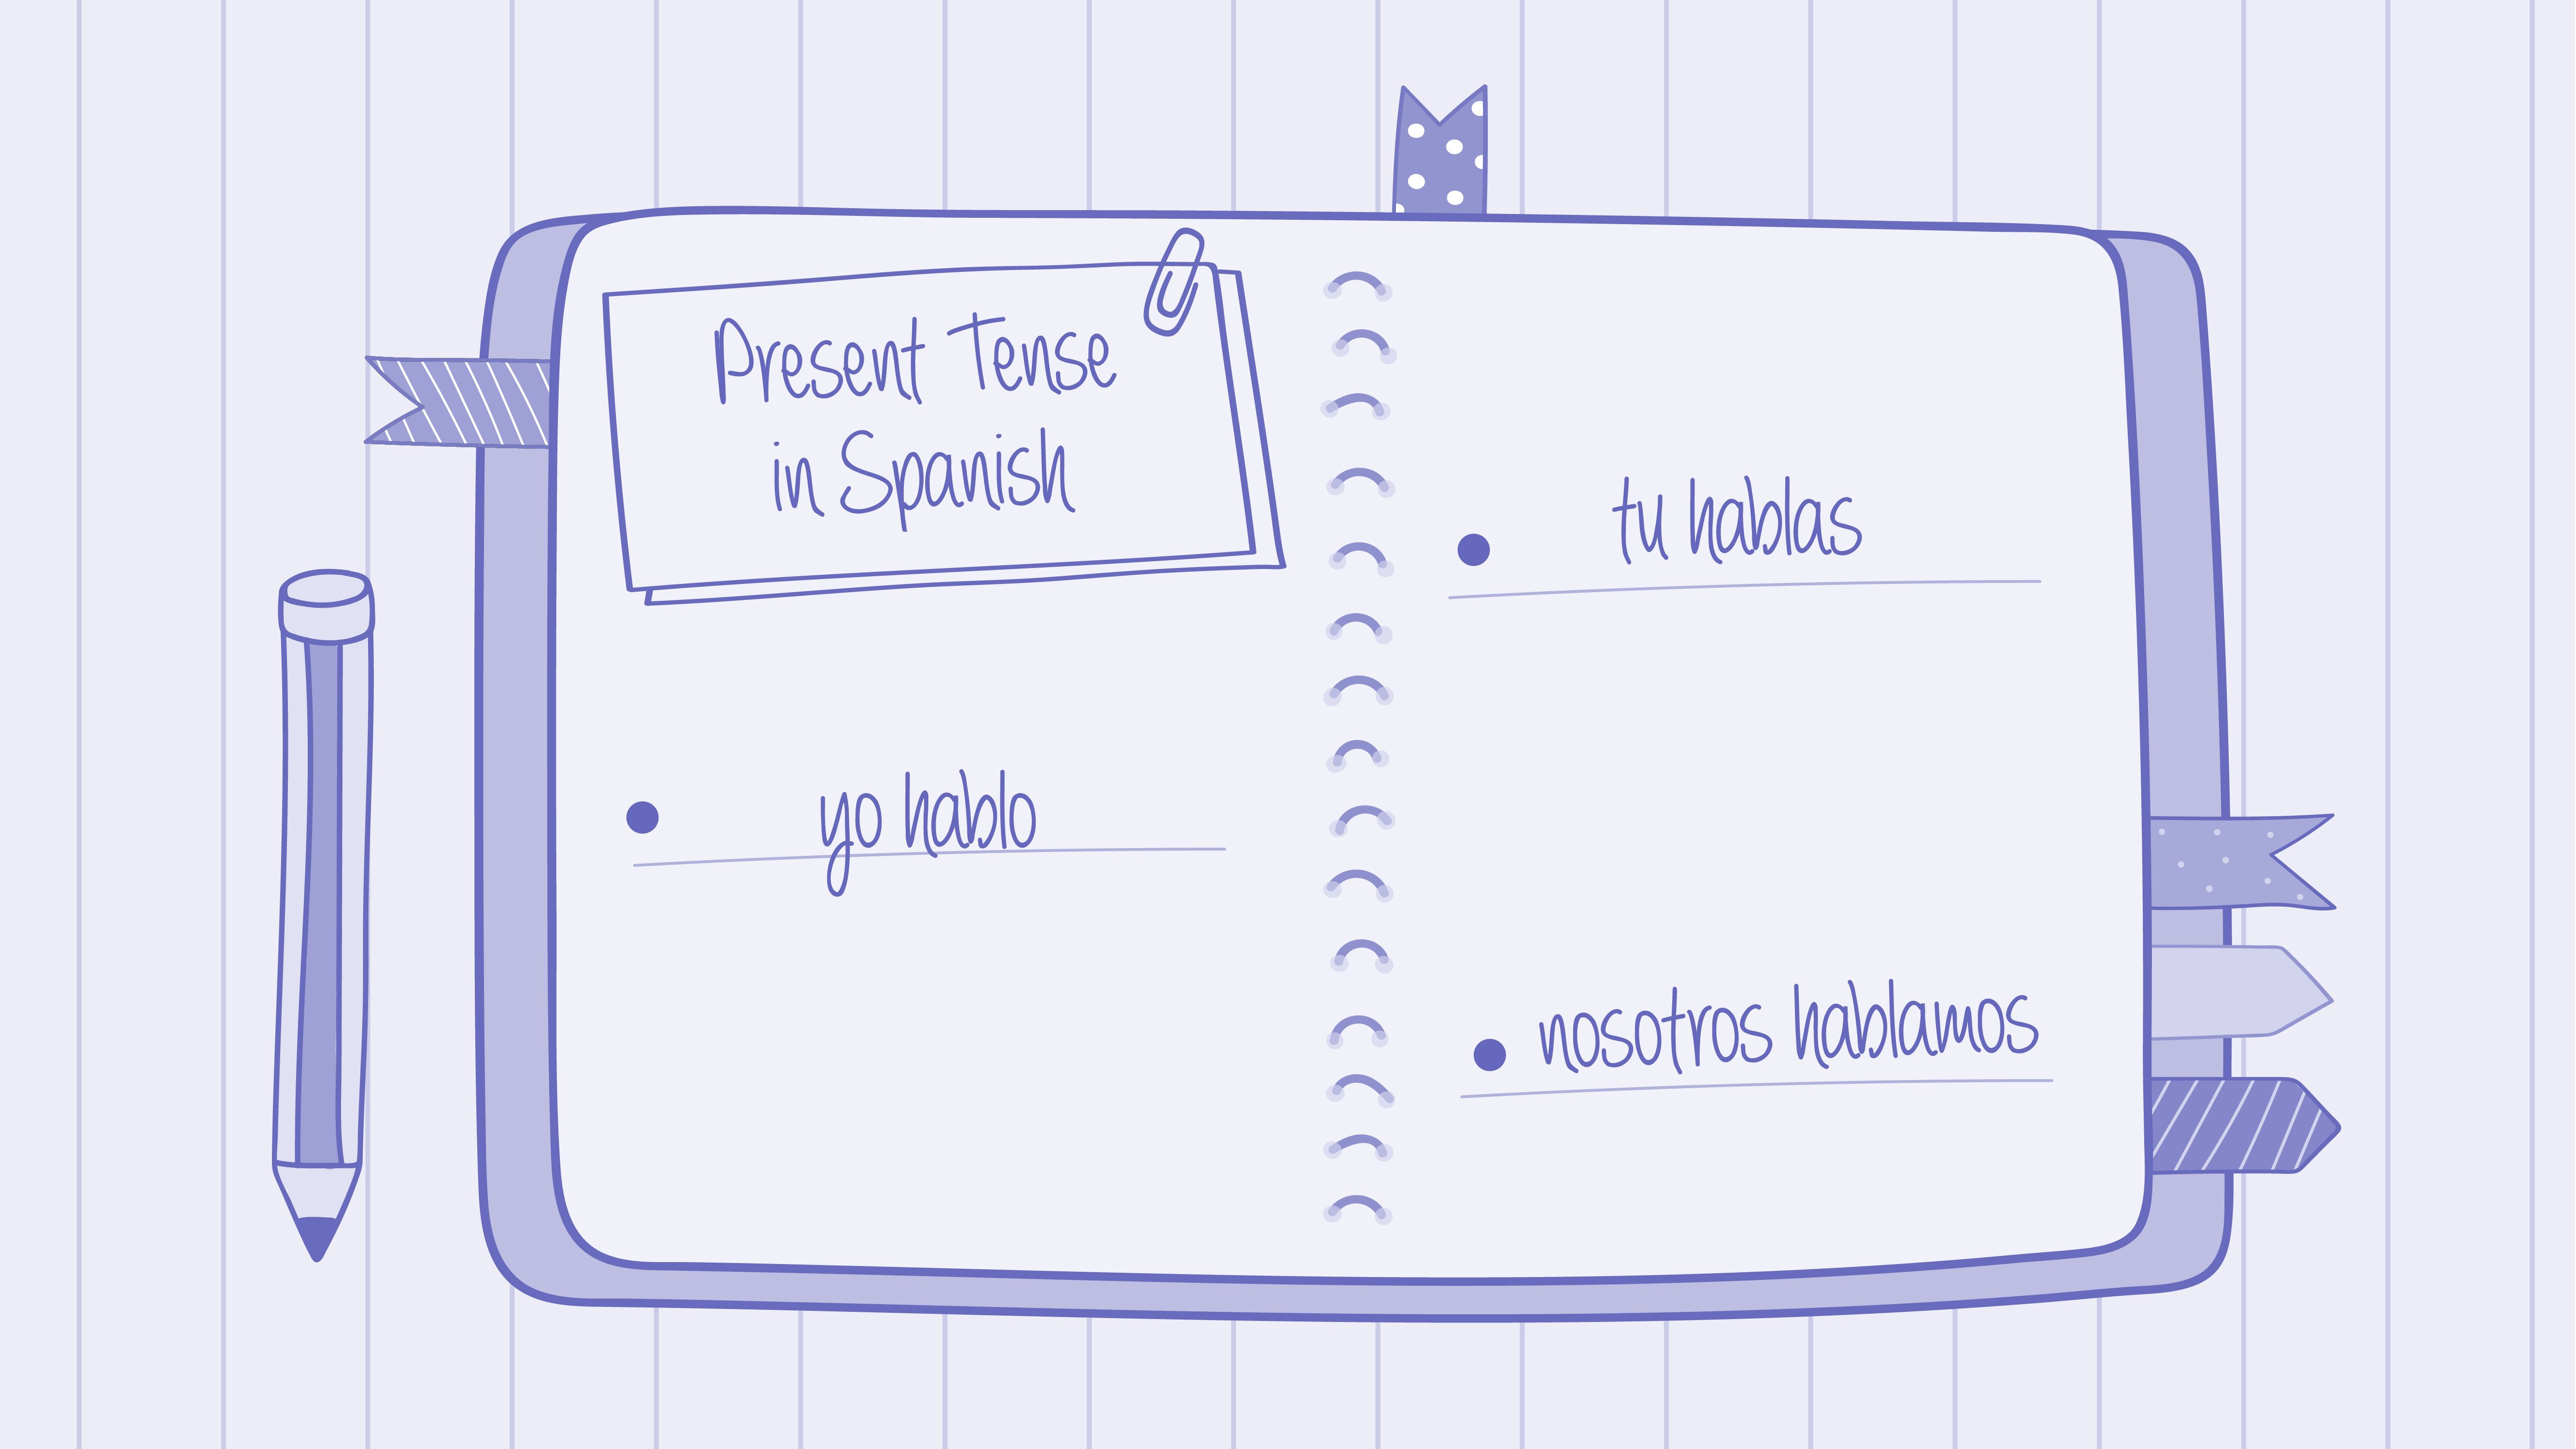 An illustration of Soren’s notebook, with “yo hablo, tu hablas, nosotros hablamos” written on the page.